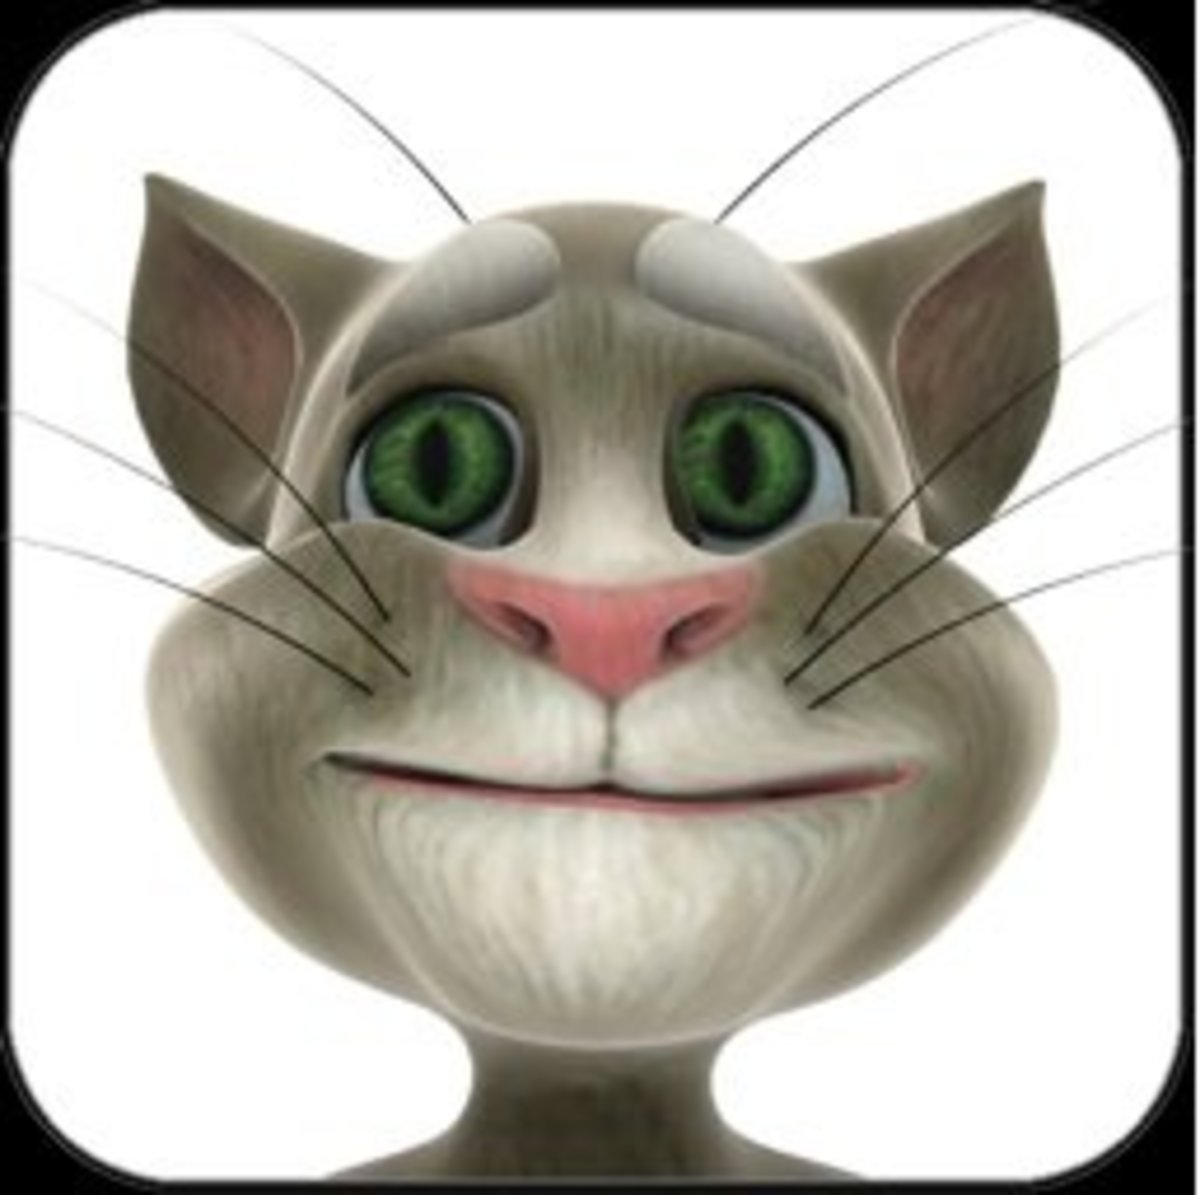 download-talking-tom-cat-app-for-iphone-tips-moves-tricks